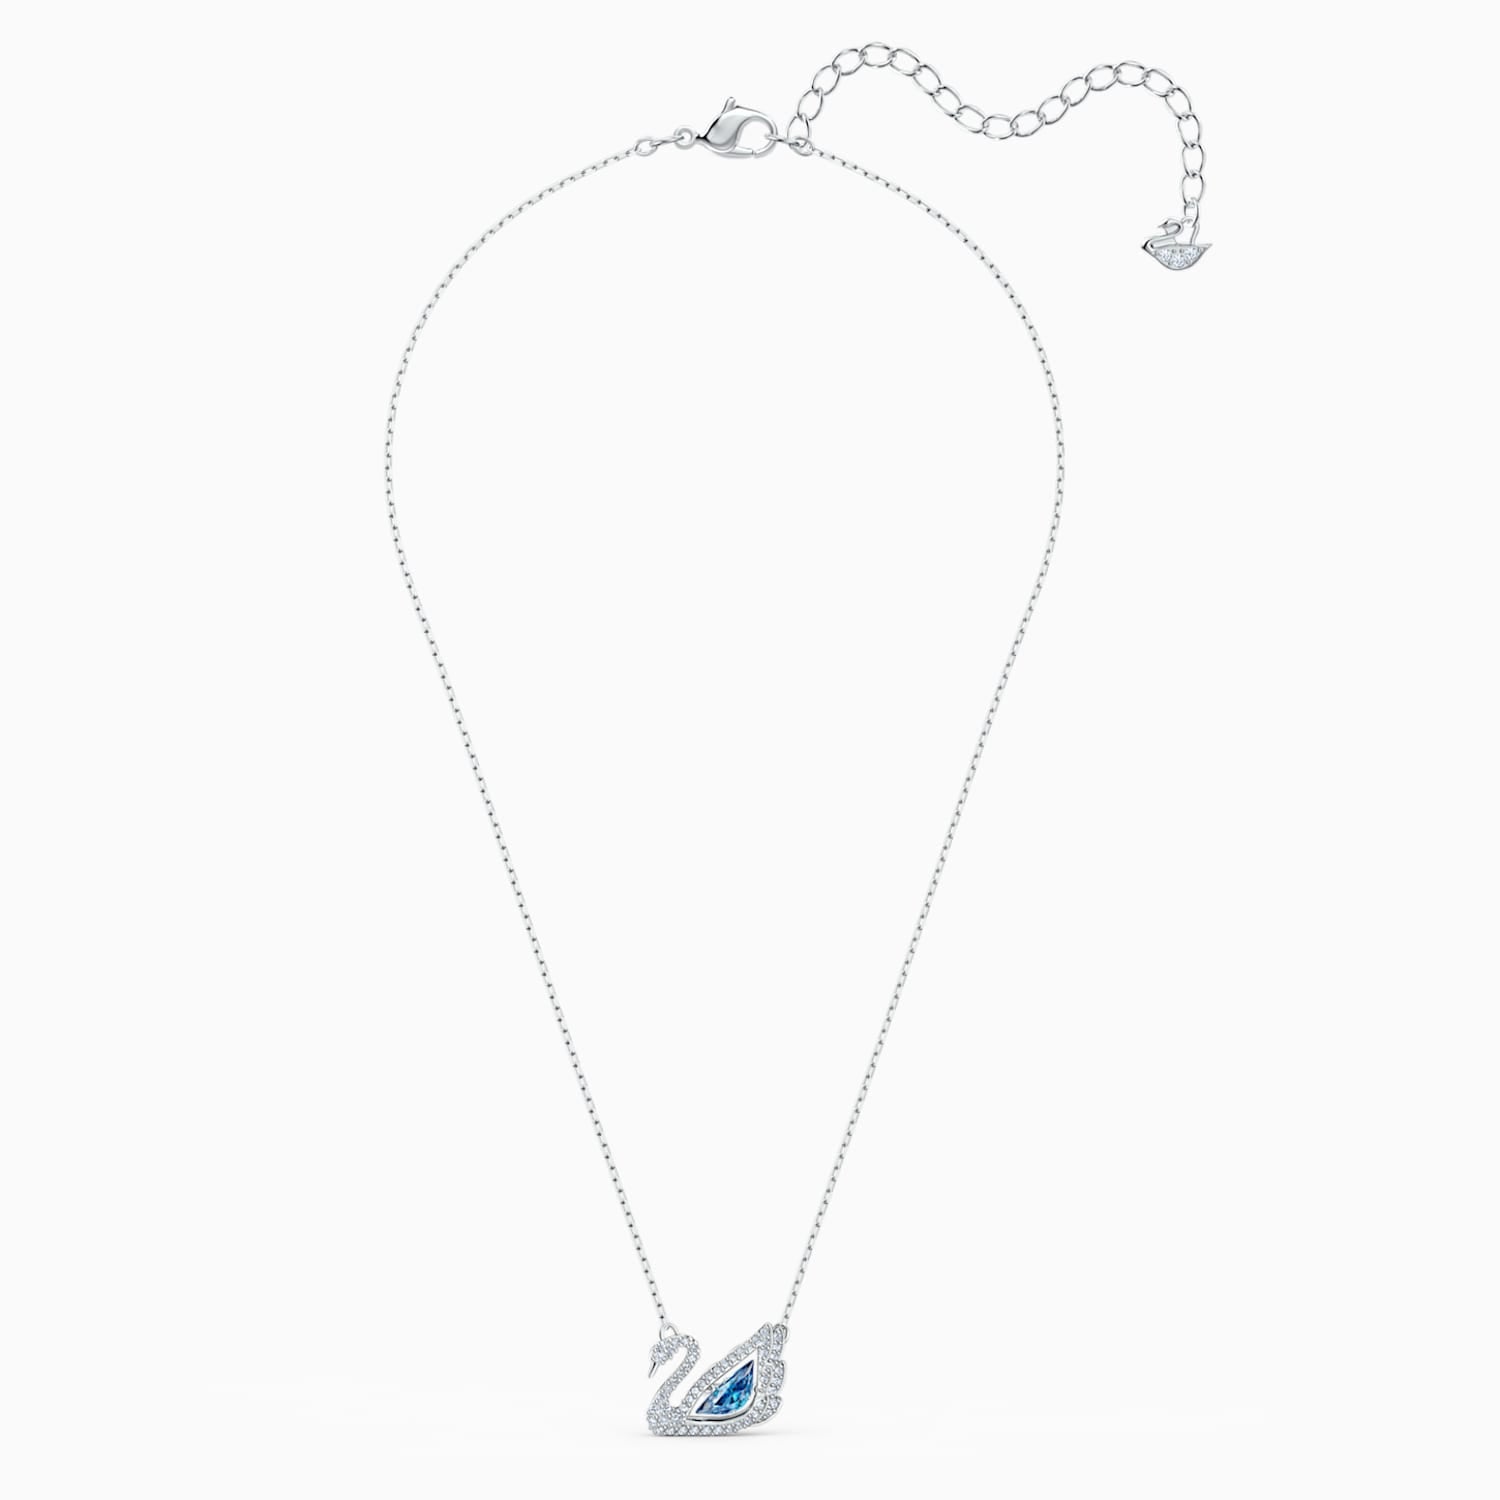 Buy Swarovski Dancing Swan Necklace Cz Fancy Blue One Size at Amazon.in